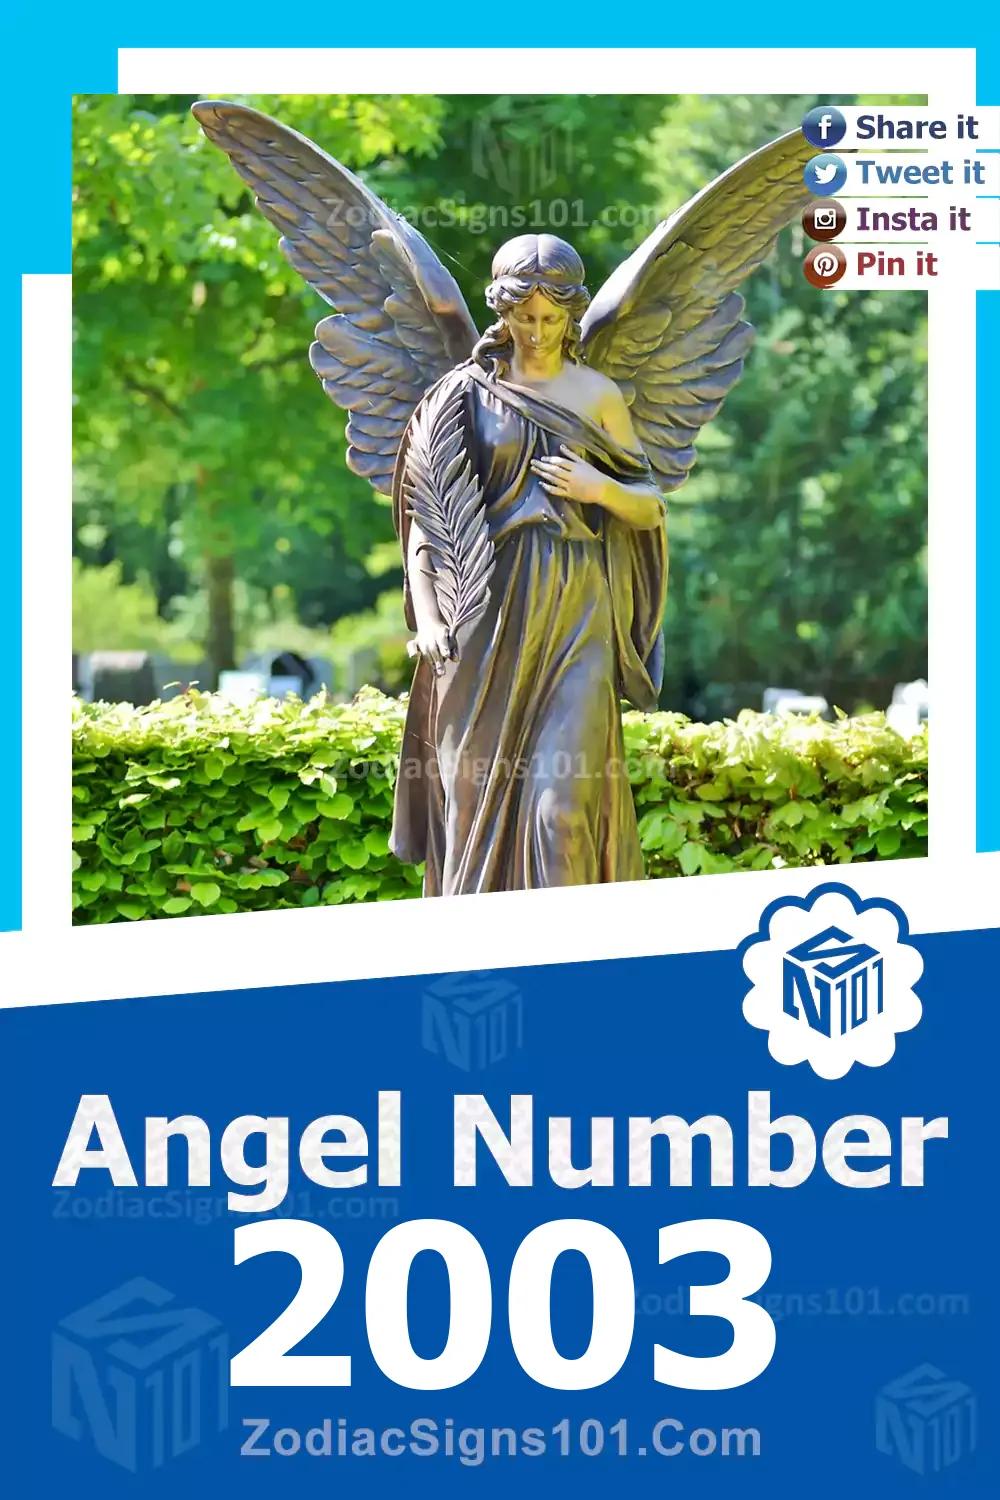 2003-Angel-Number-Meaning.jpg